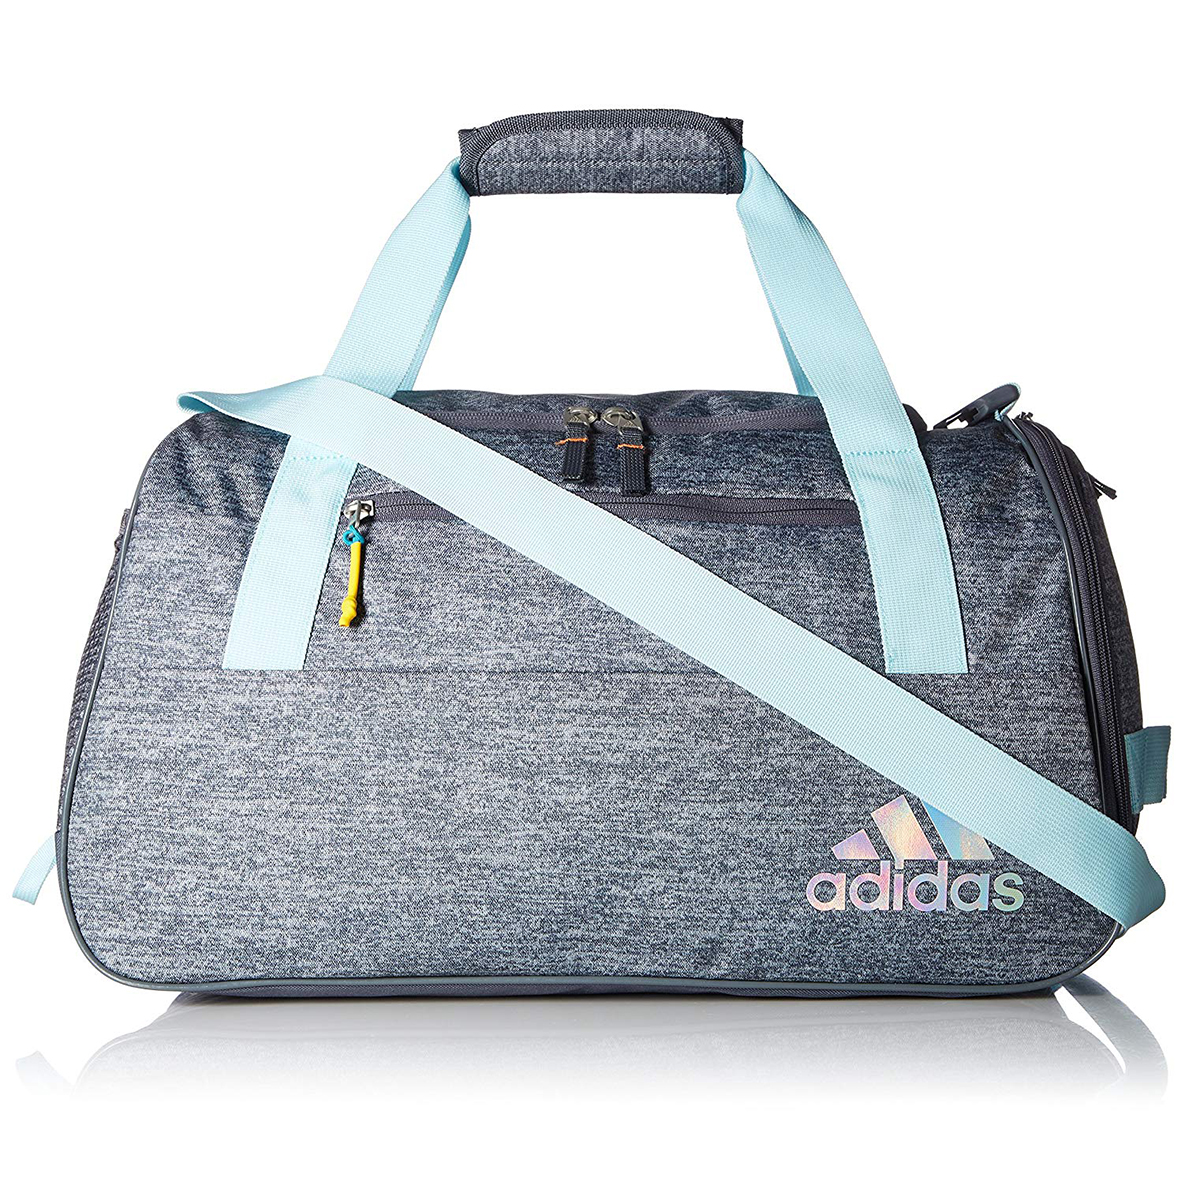 adidas Defender 2 Duffel Bag Small | Workout bags, Duffle bag sports, Bags